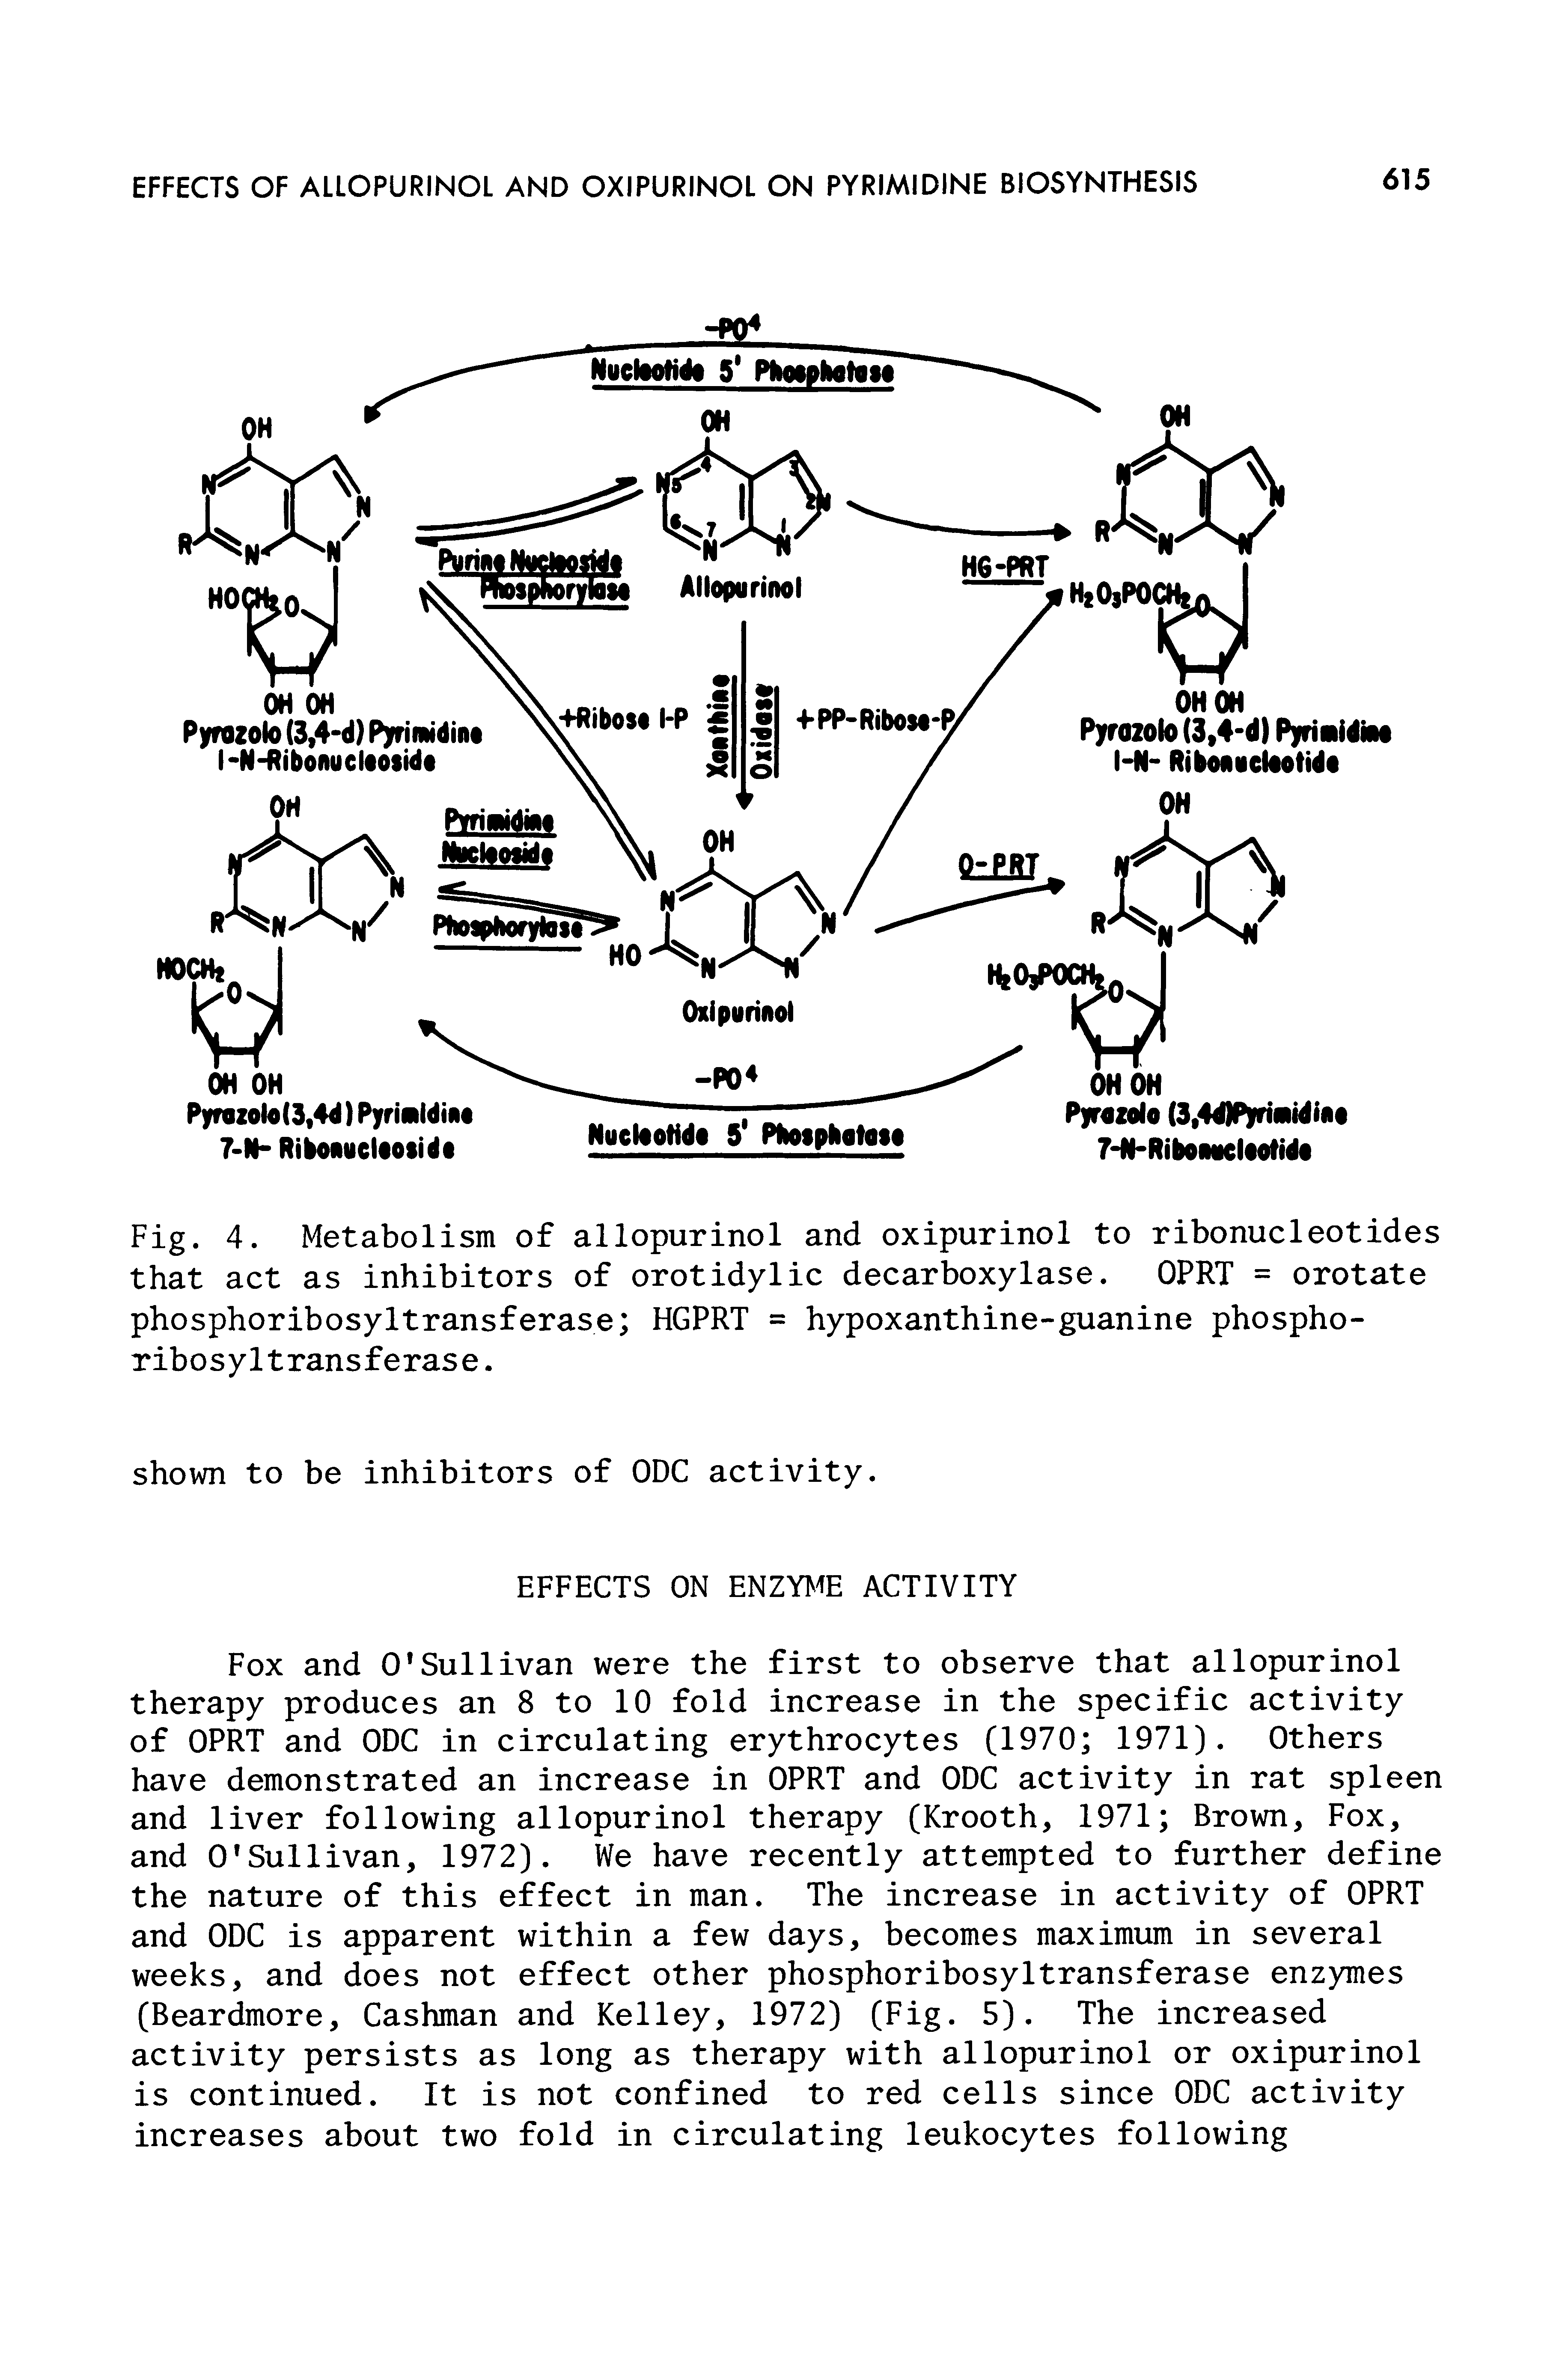 Fig. 4. Metabolism of allopurinol and oxipurinol to ribonucleotides that act as inhibitors of orotidylic decarboxylase. OPRT = orotate phosphoribosyltransferase HGPRT = hypoxanthine-guanine phospho-ribosyltransferase.